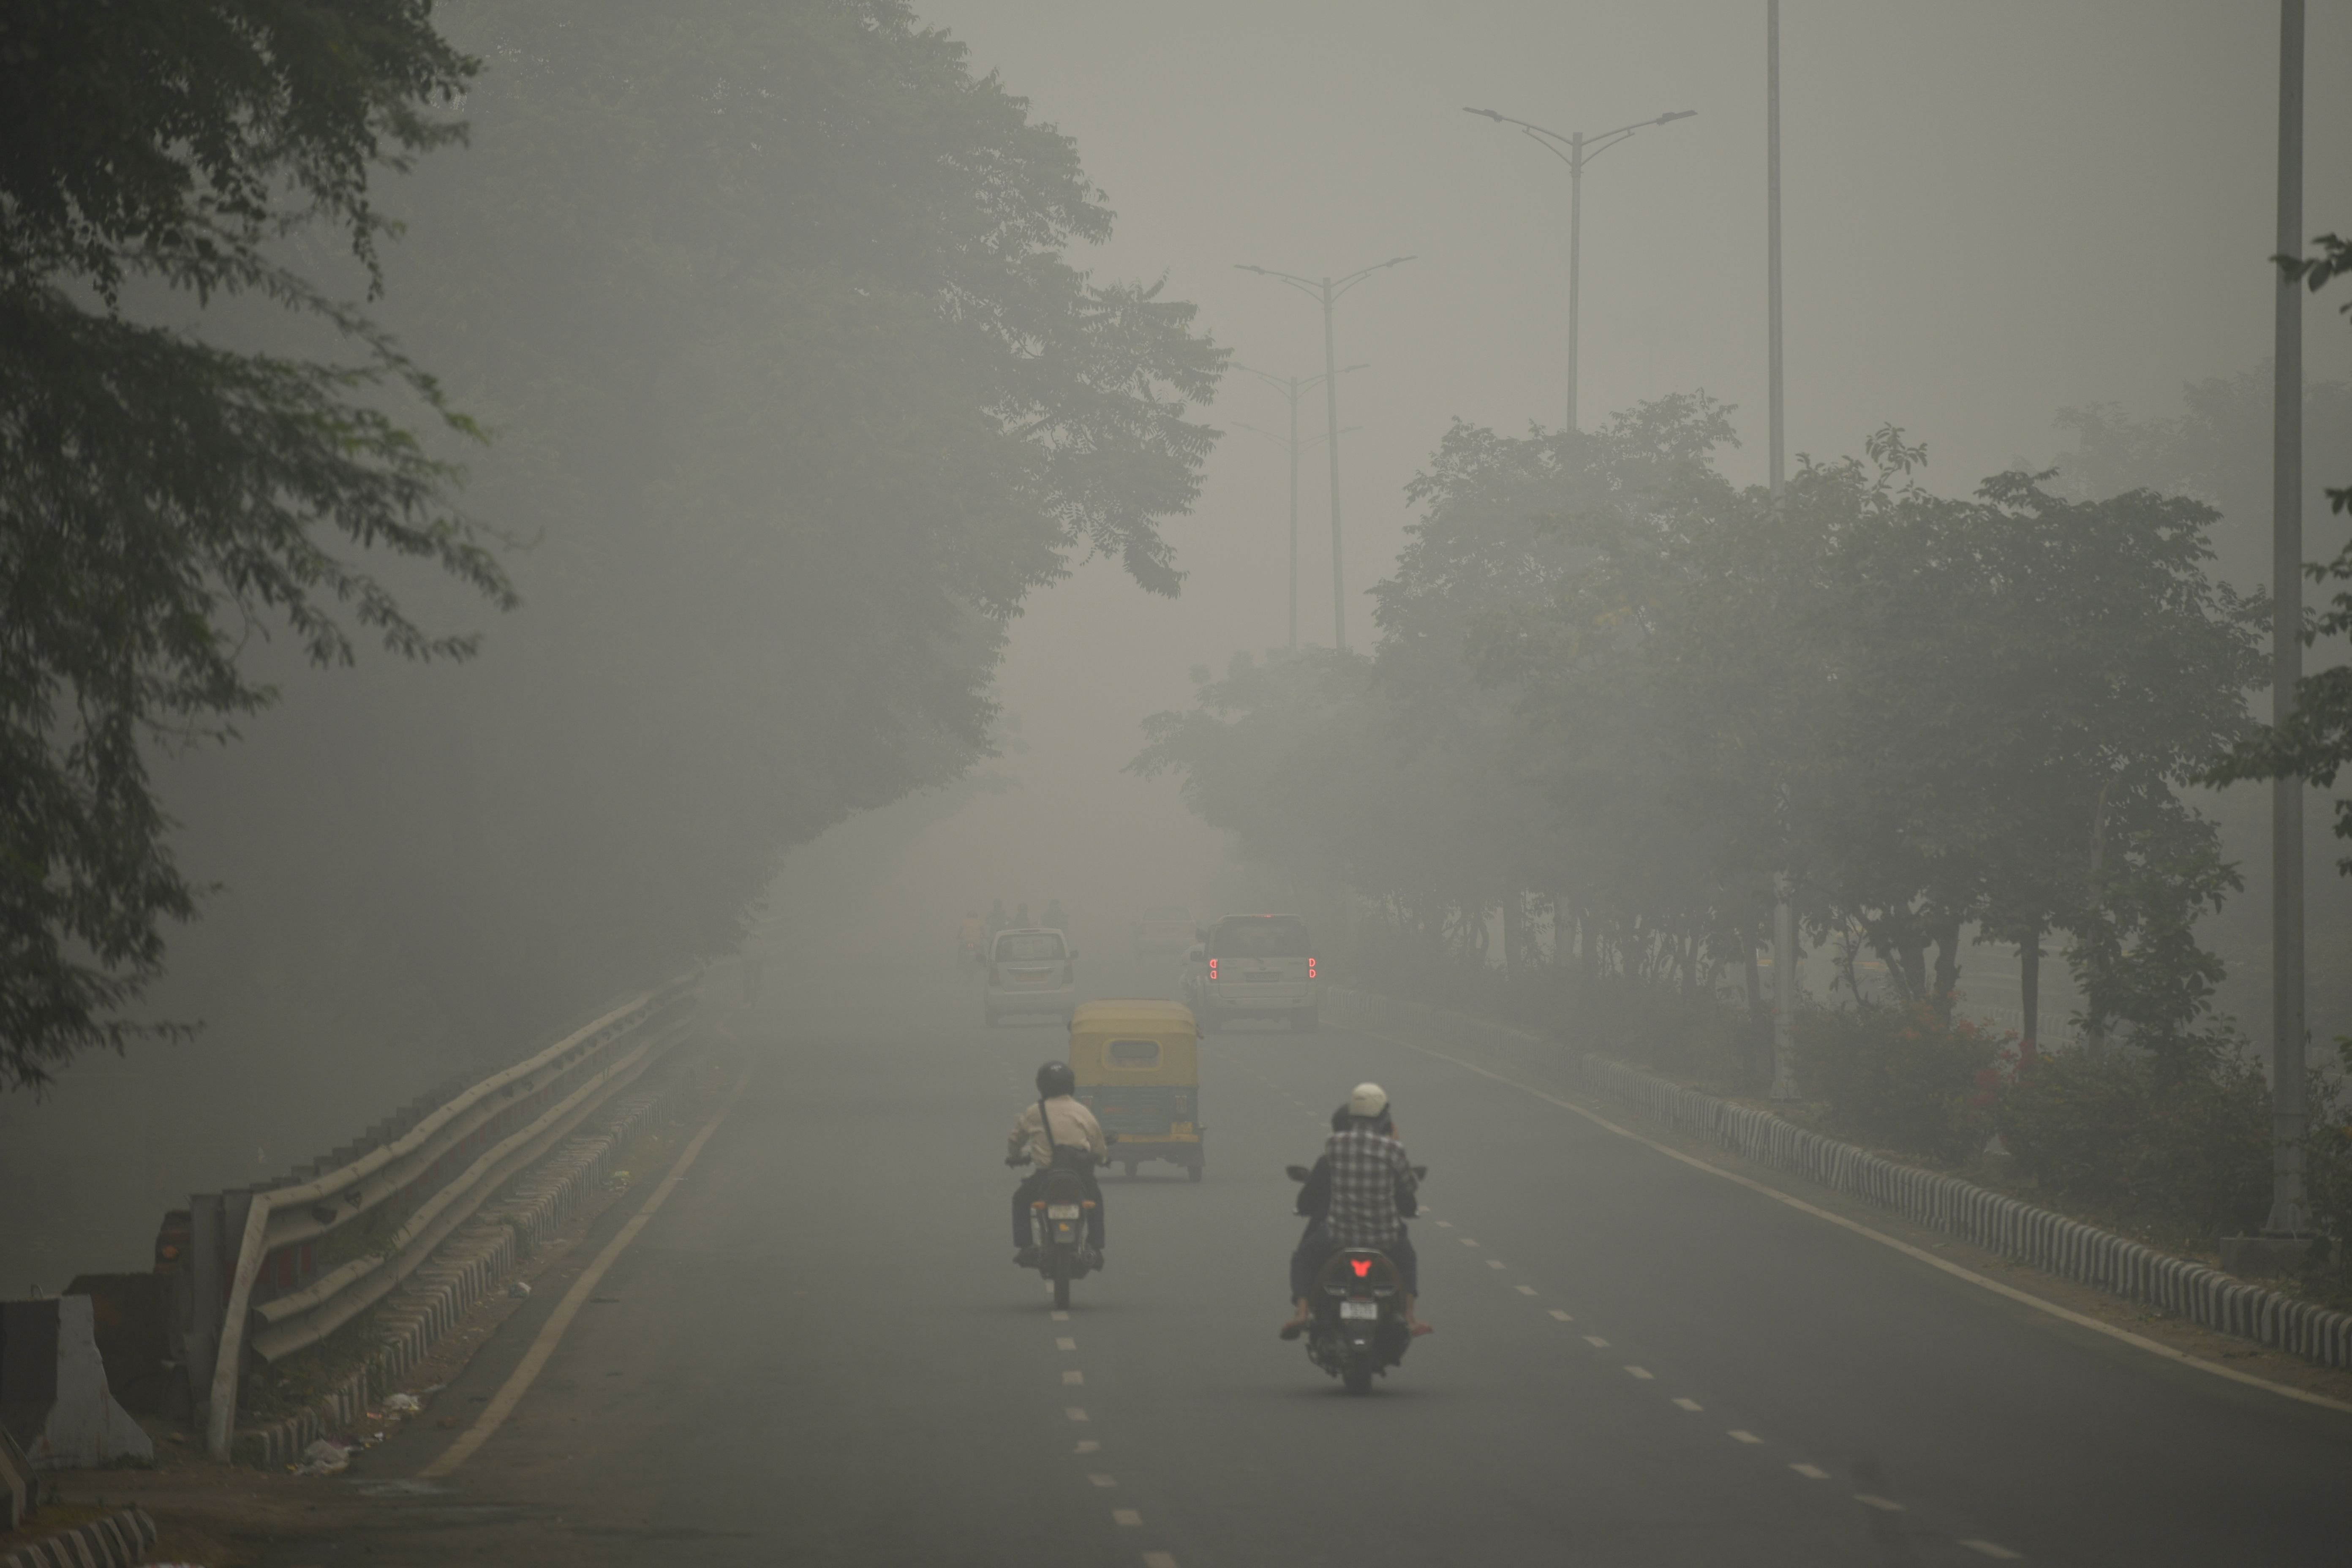 Indian capital Delhi gasps under choking smog